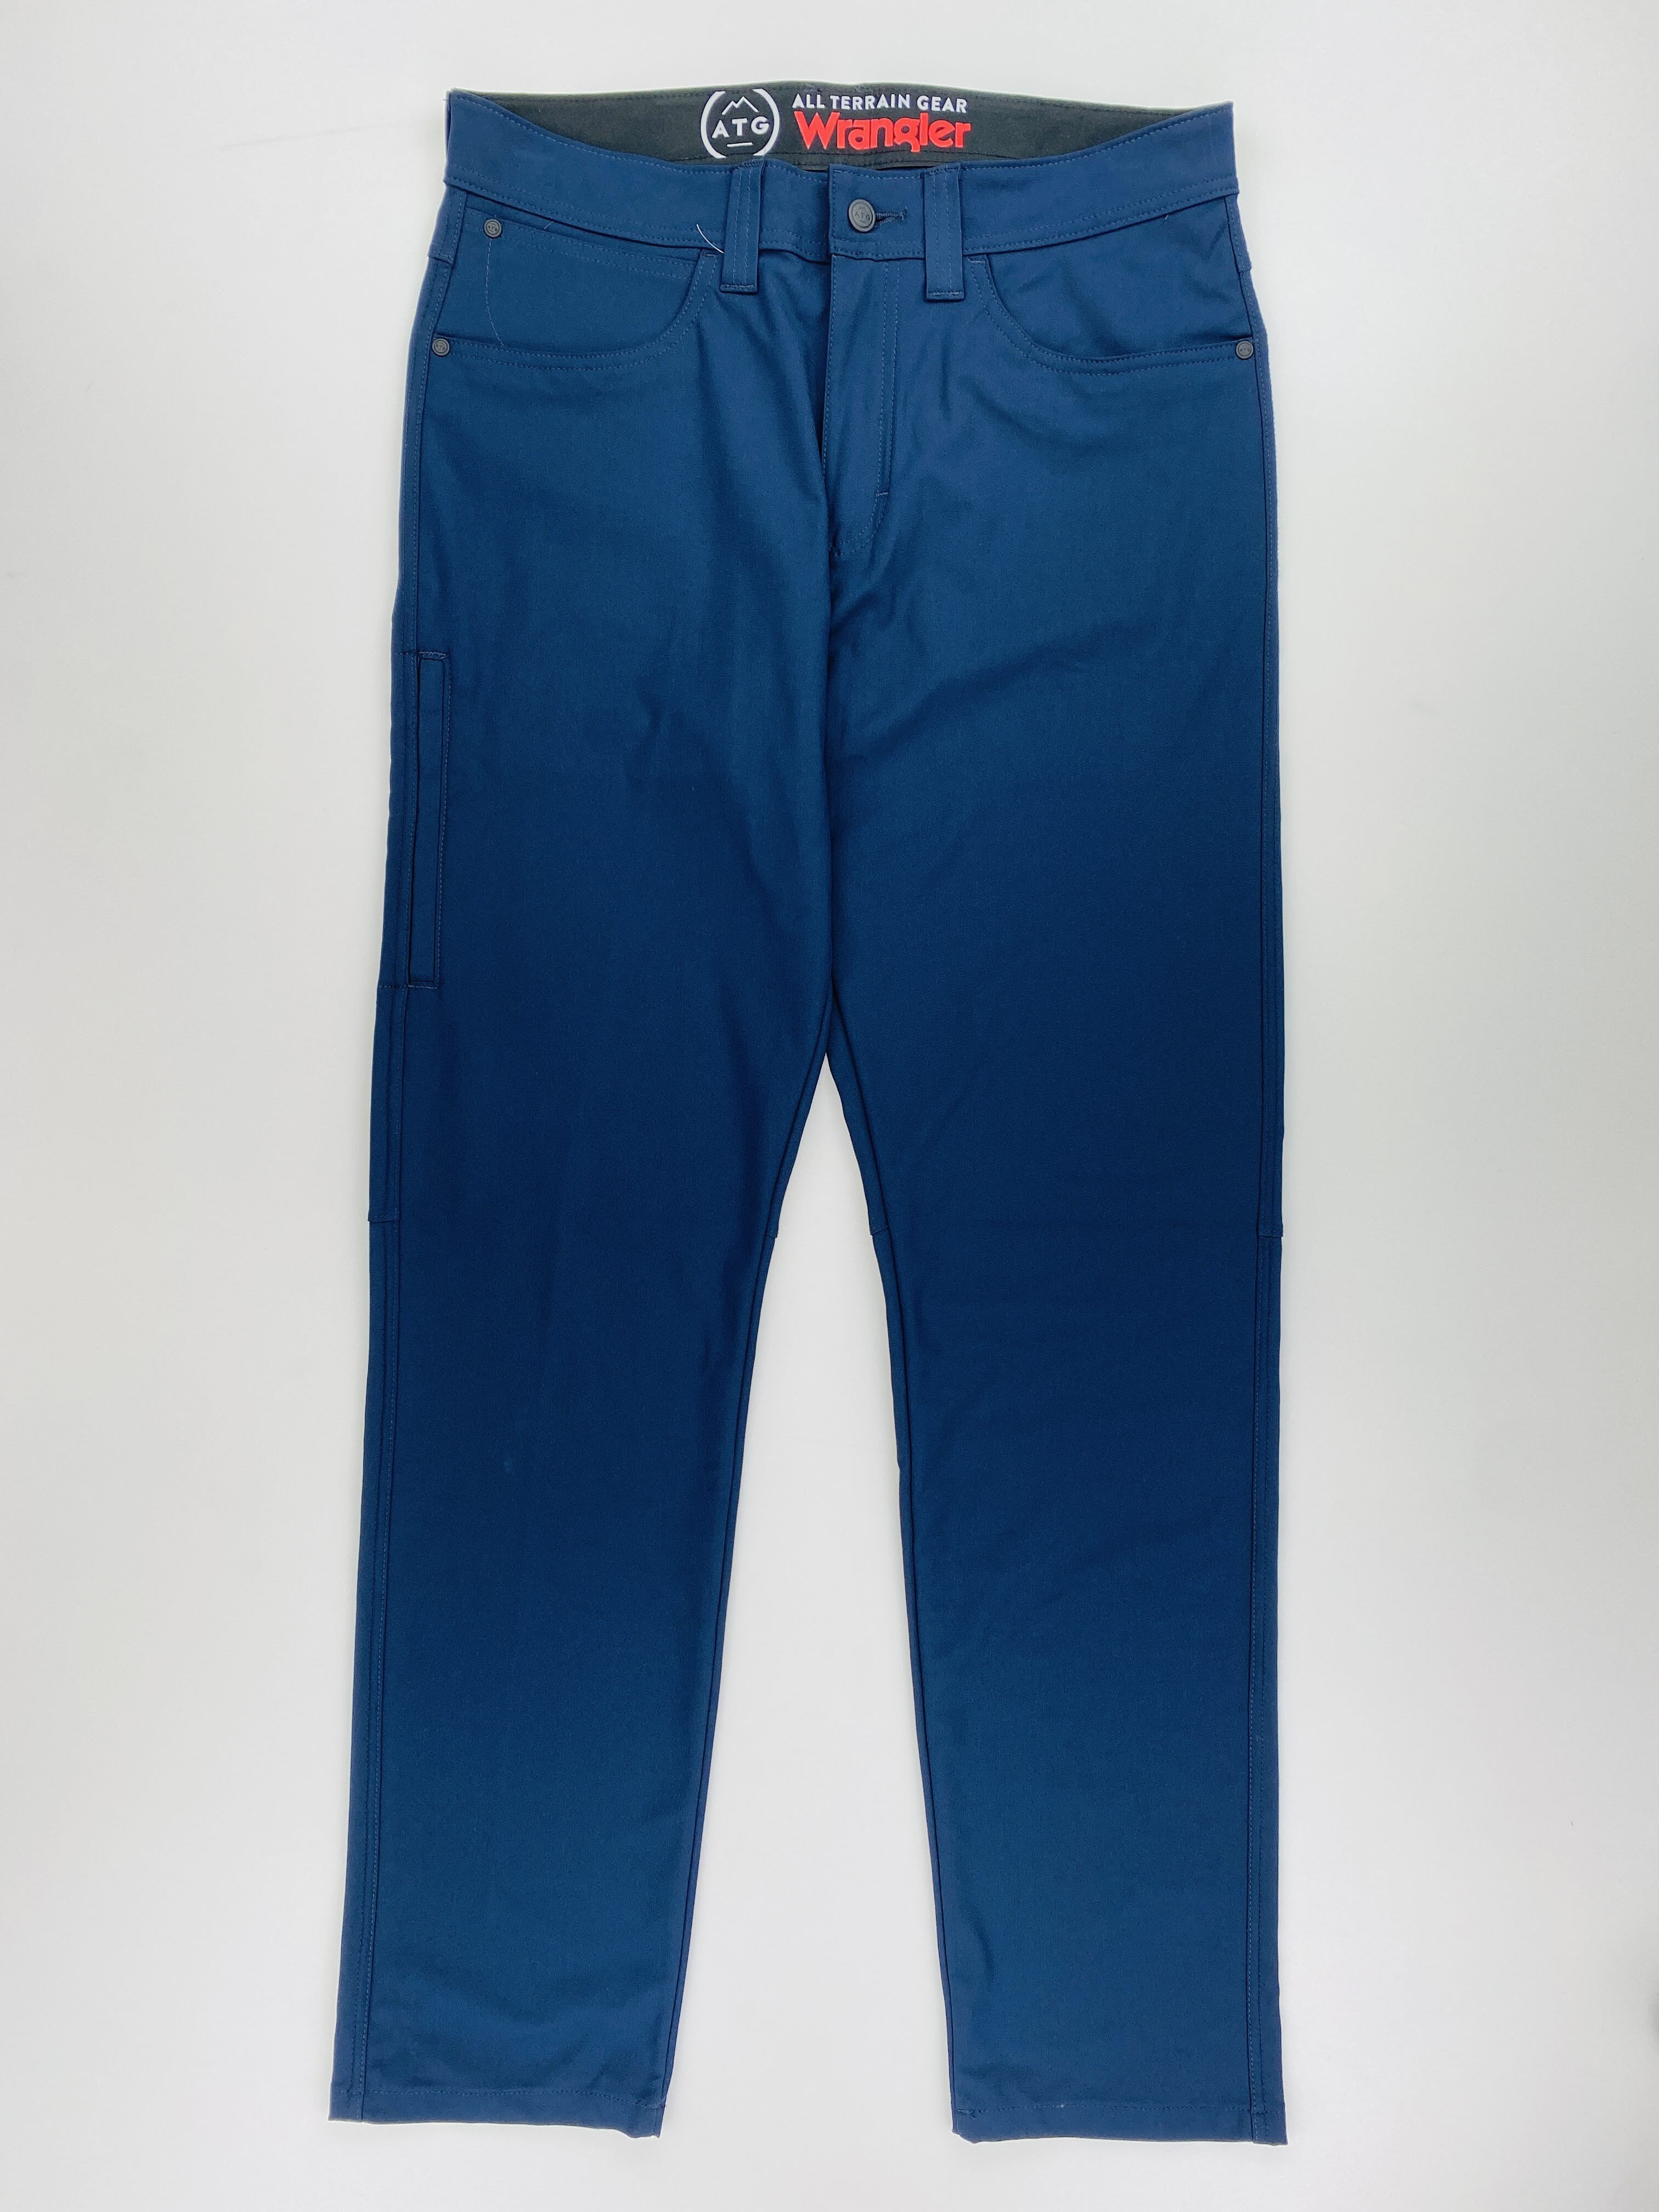 Wrangler Fwds 5 Pocket Pants - Second Hand Walking trousers - Men's - Bleu - US 32 | Hardloop